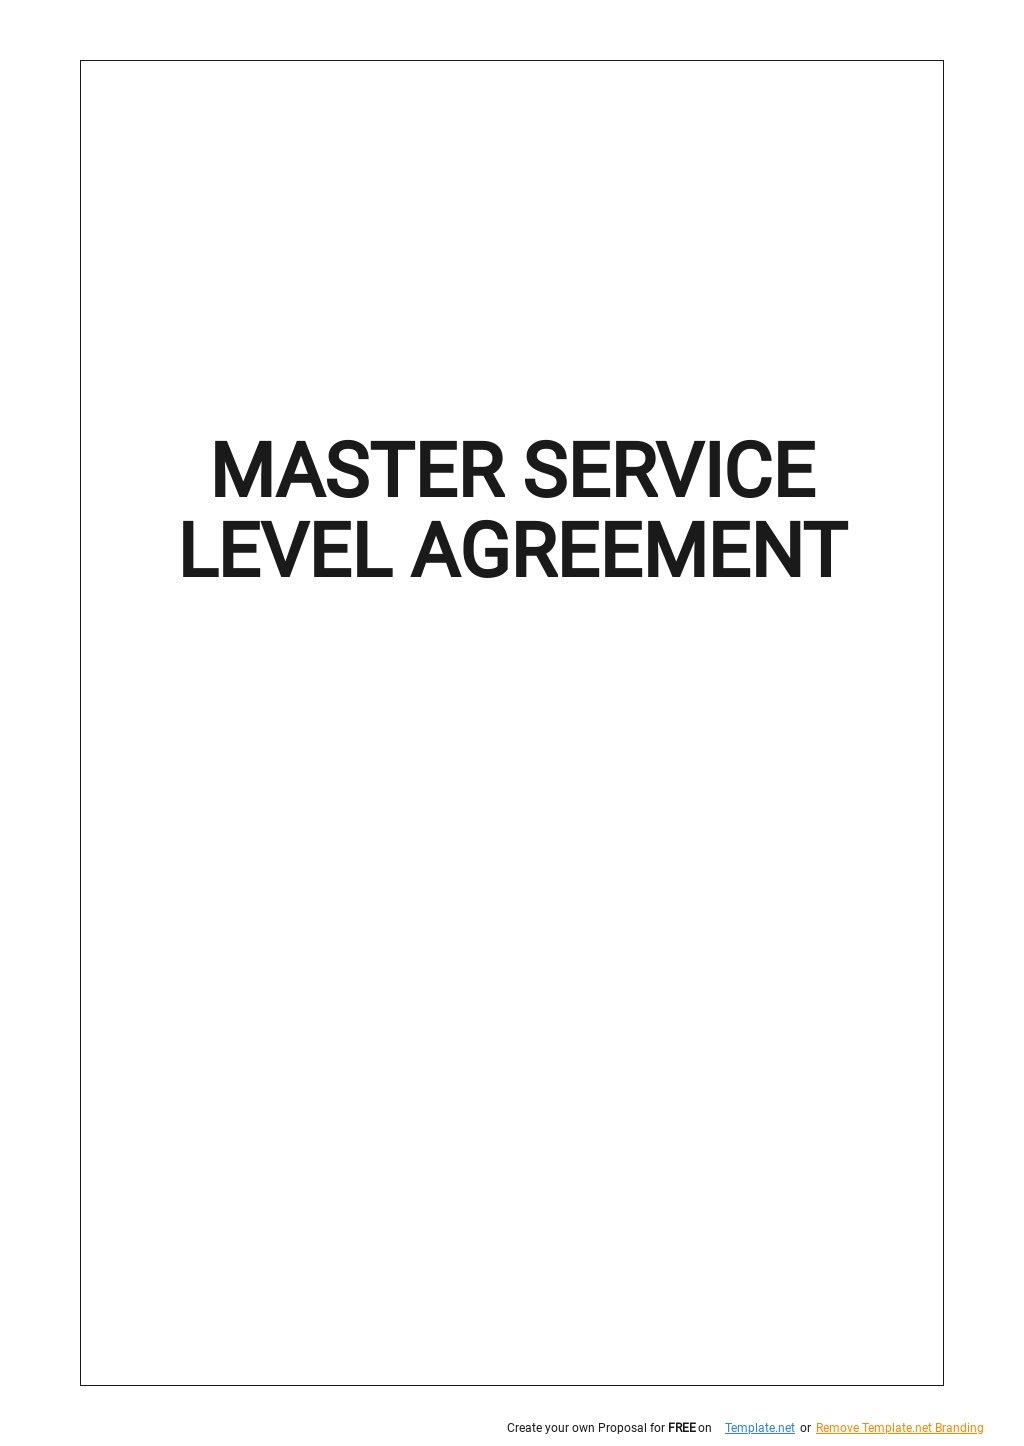 MSA (Master Service Agreement) Template Google Docs Word Apple